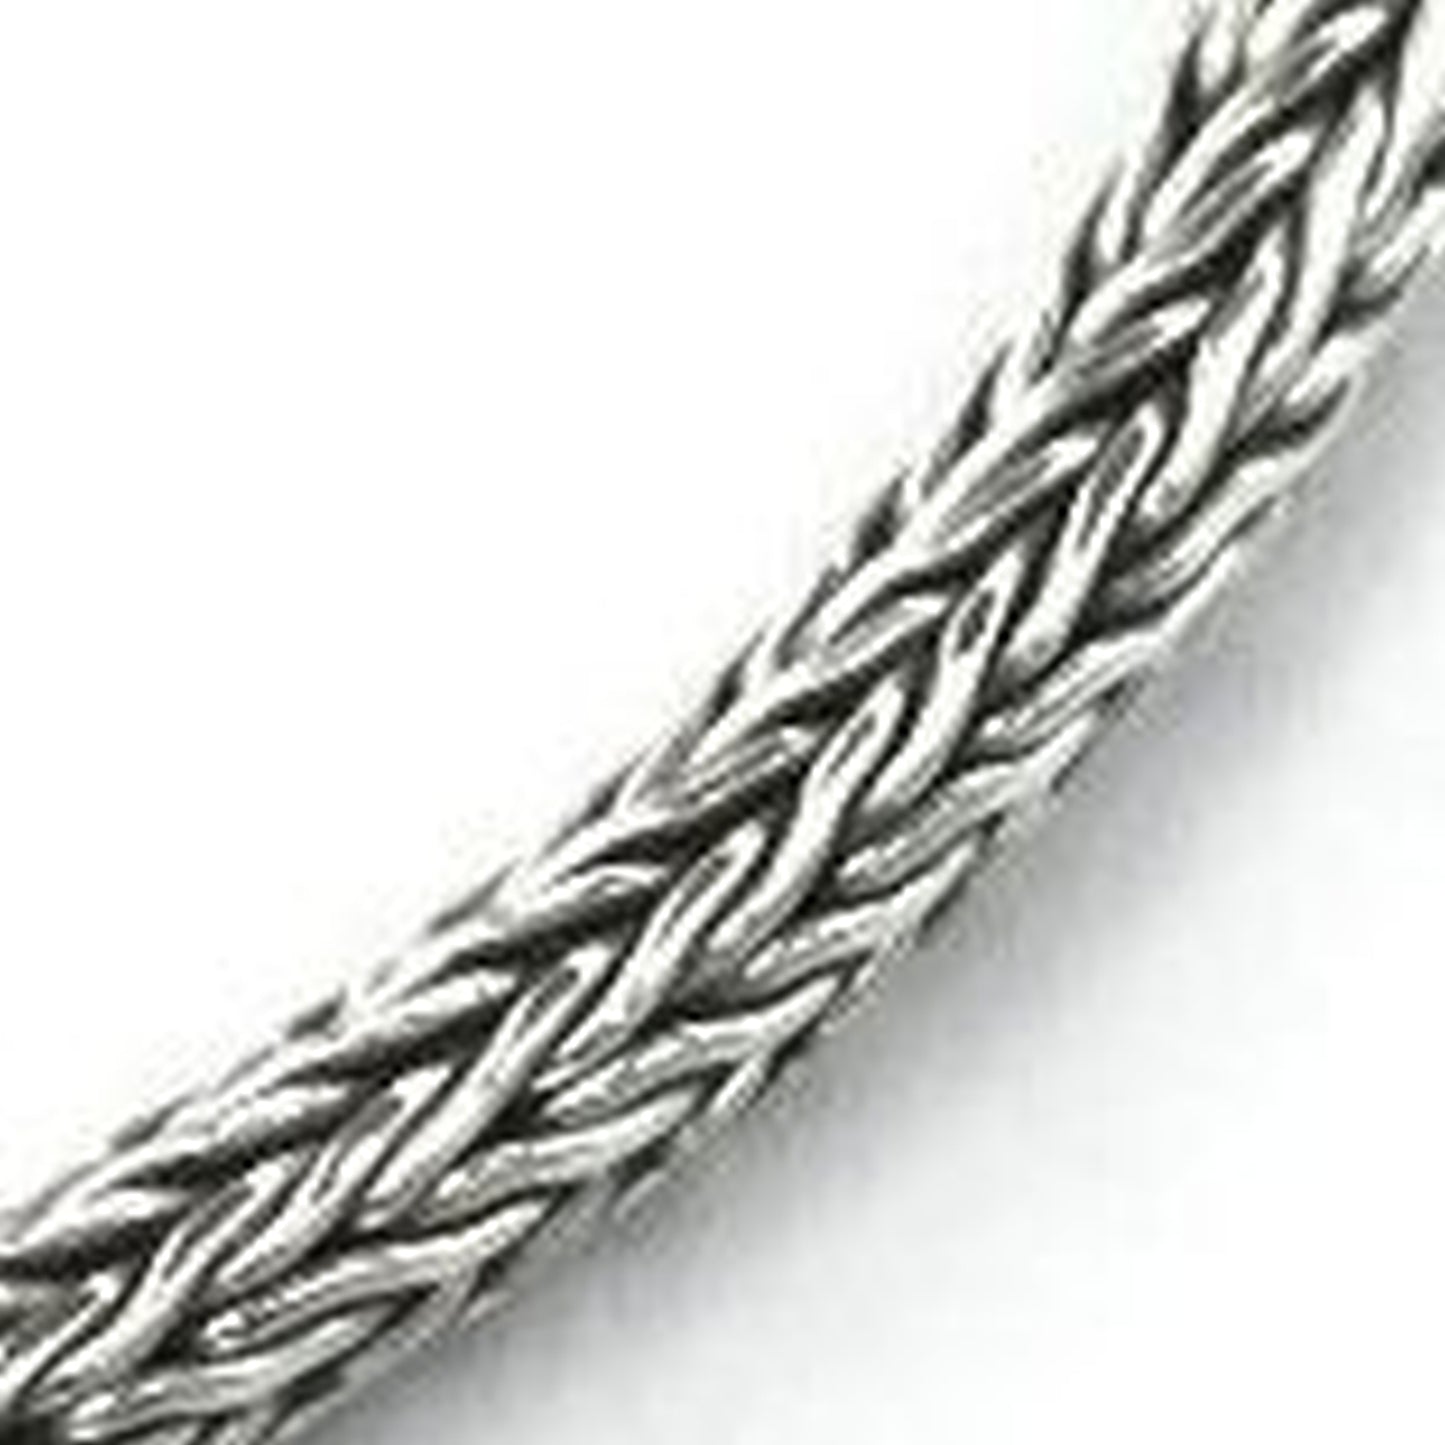 TN2m8-9" Herringbone Chain Bracelet